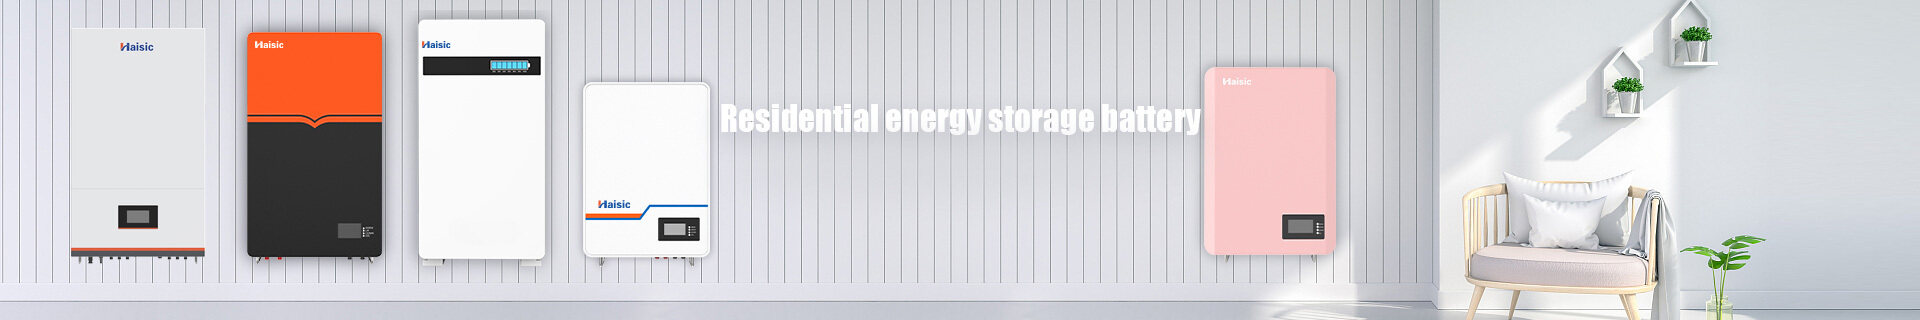 solar backup batteries for home,solar battery storage home